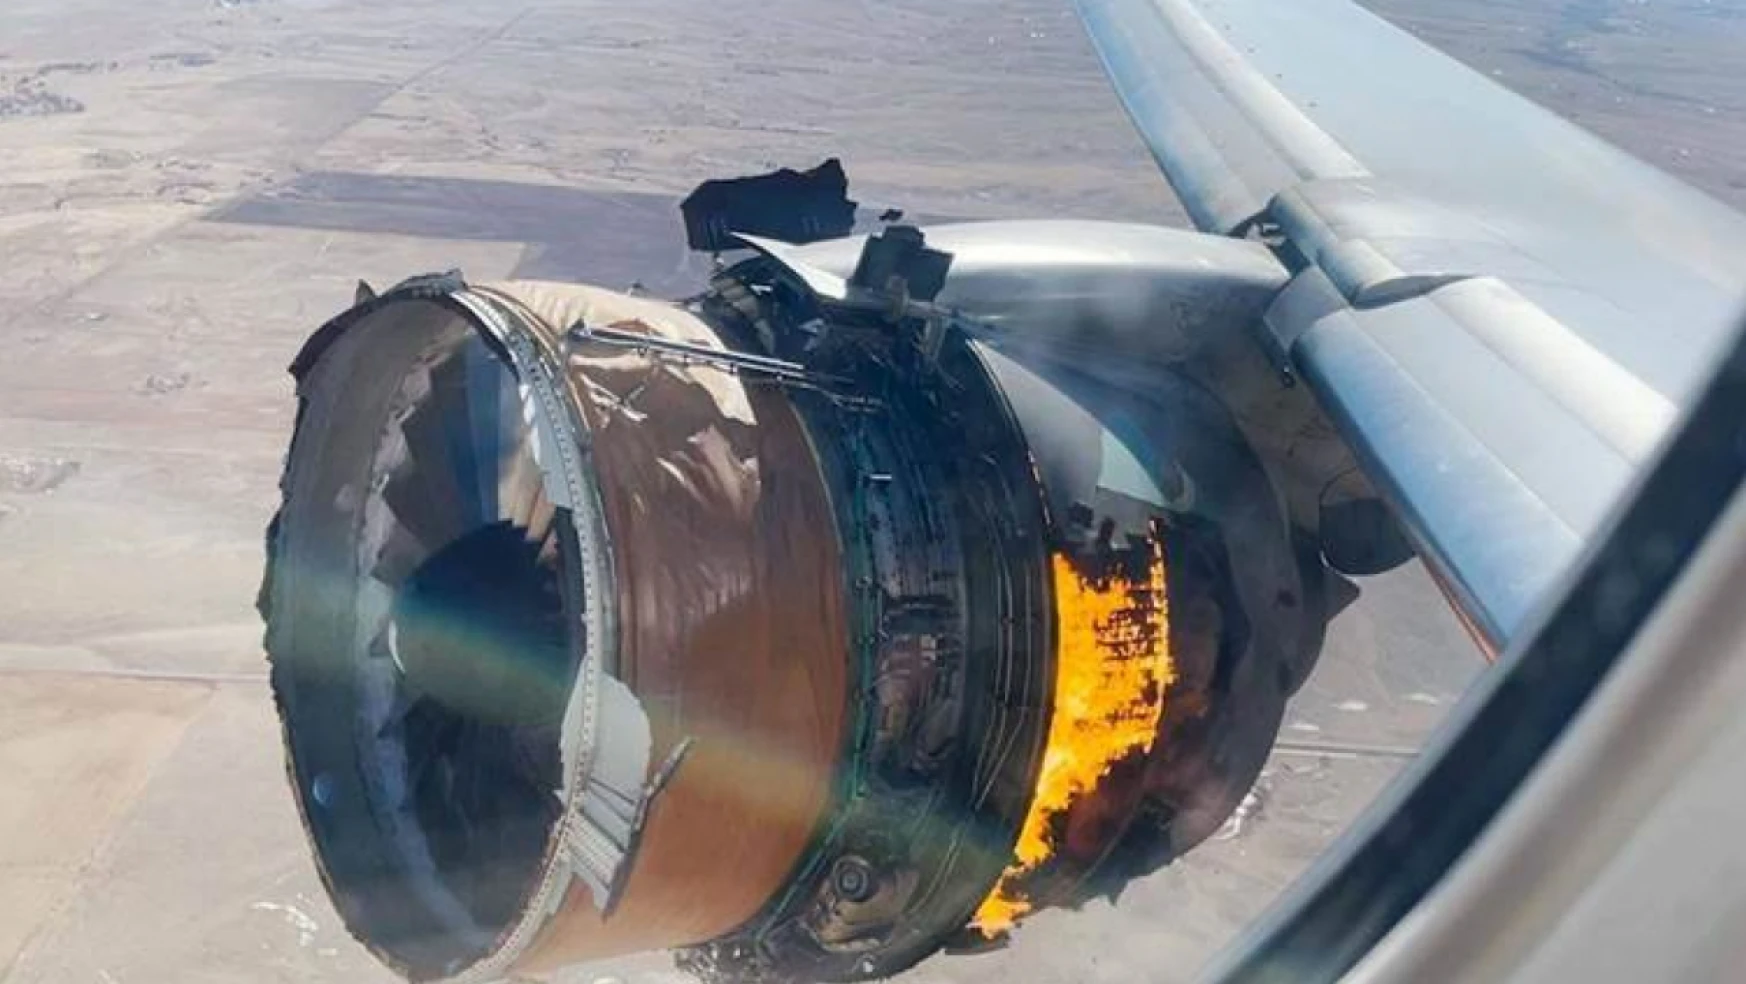 Atlas Air'e ait kargo uçağı havada alev aldı, acil iniş yaptı